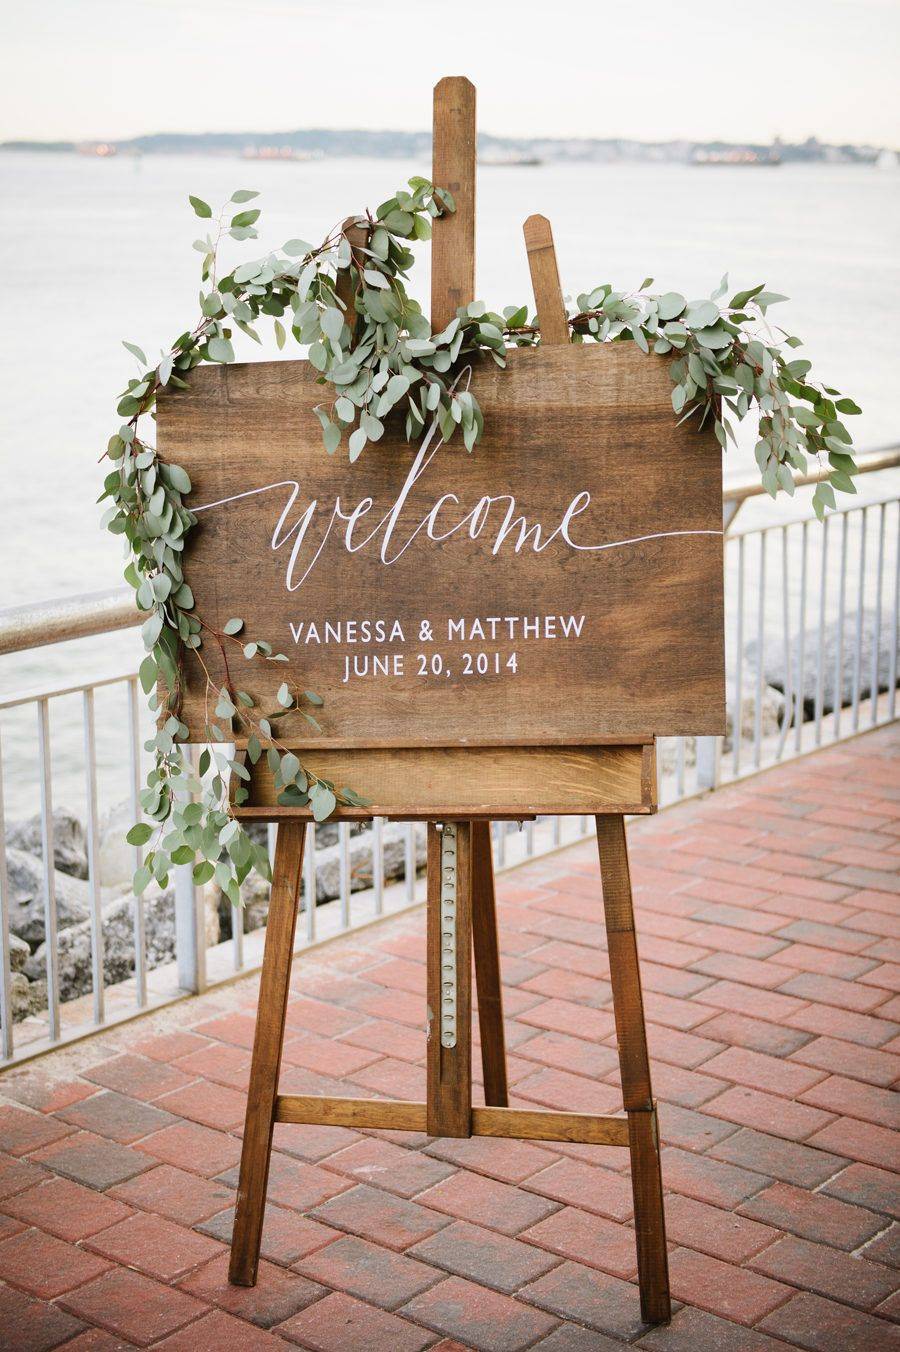 Cartel para boda al aire libre, Pinterest